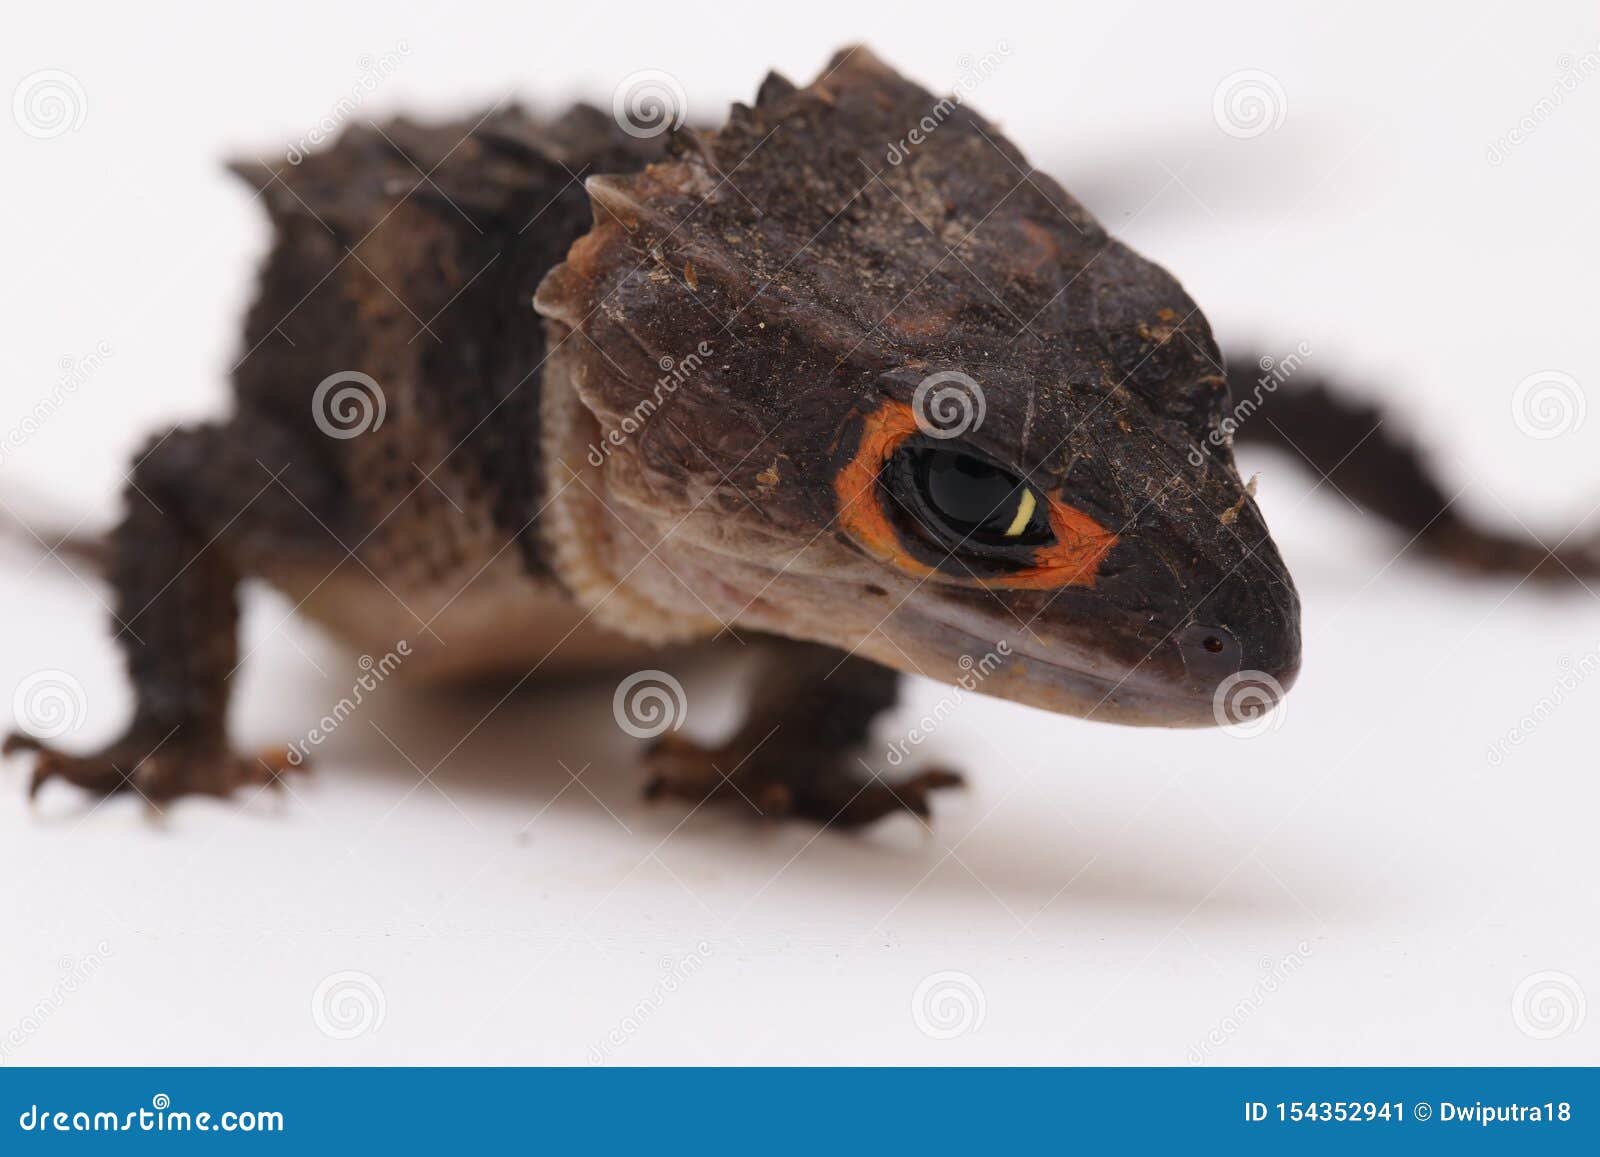 Tribolonotus Gracilis, Red-Eyed Skinks Lizard Stock Image - Image crododile, dragon: 154352941